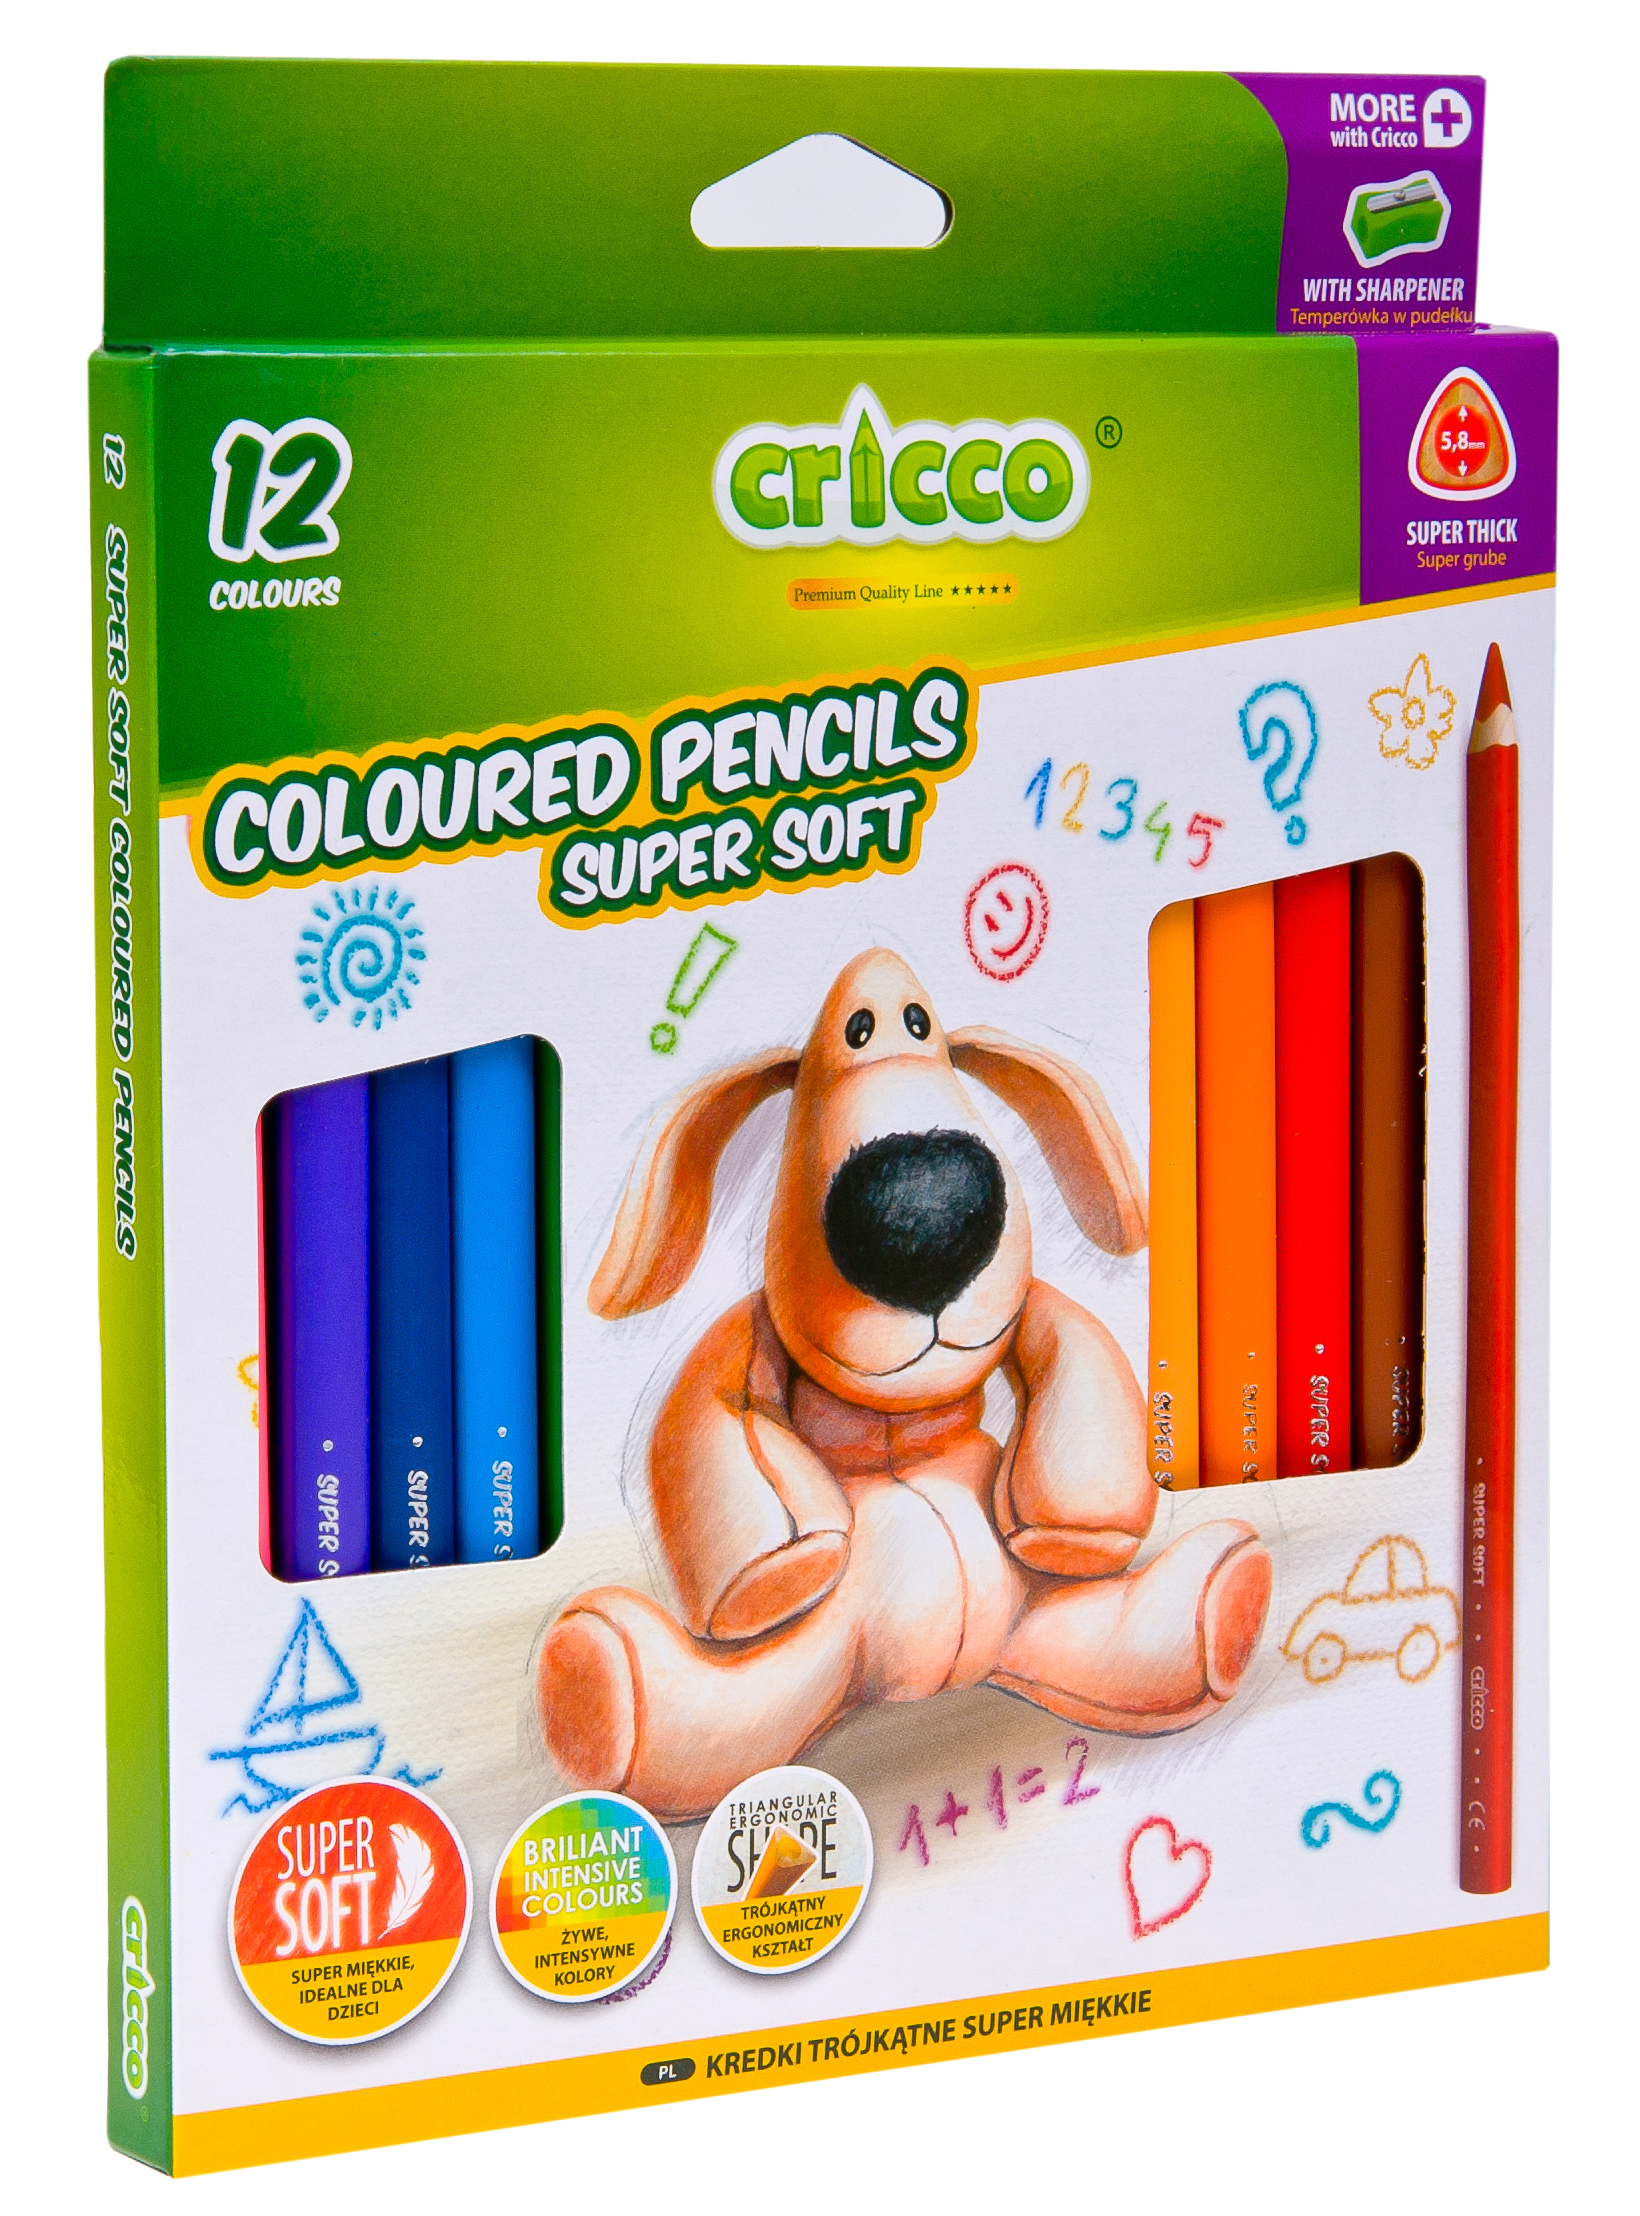 Cricco coloured pencils super soft